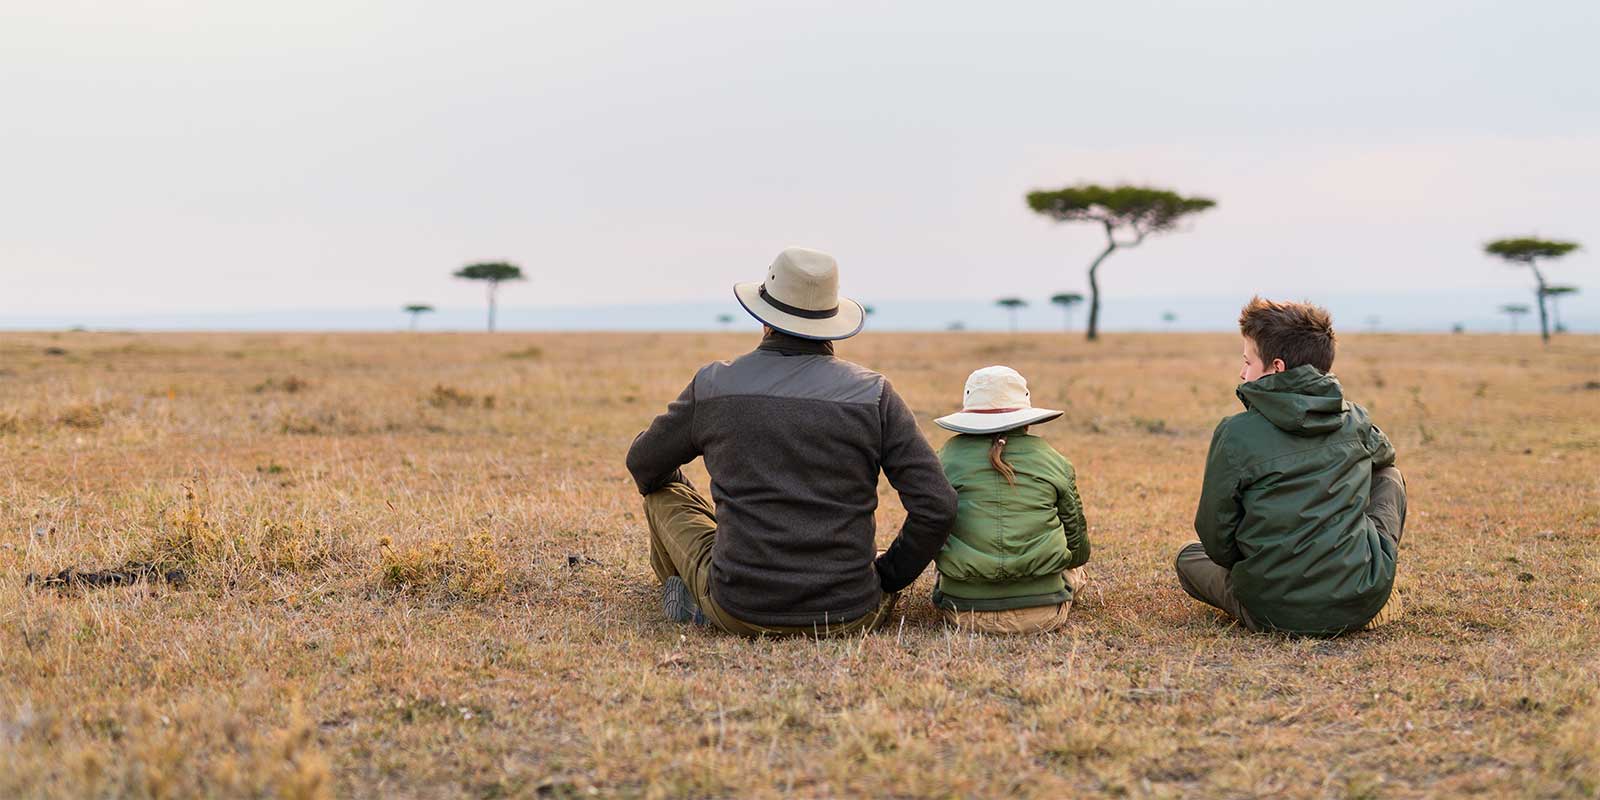 Family on an African safari